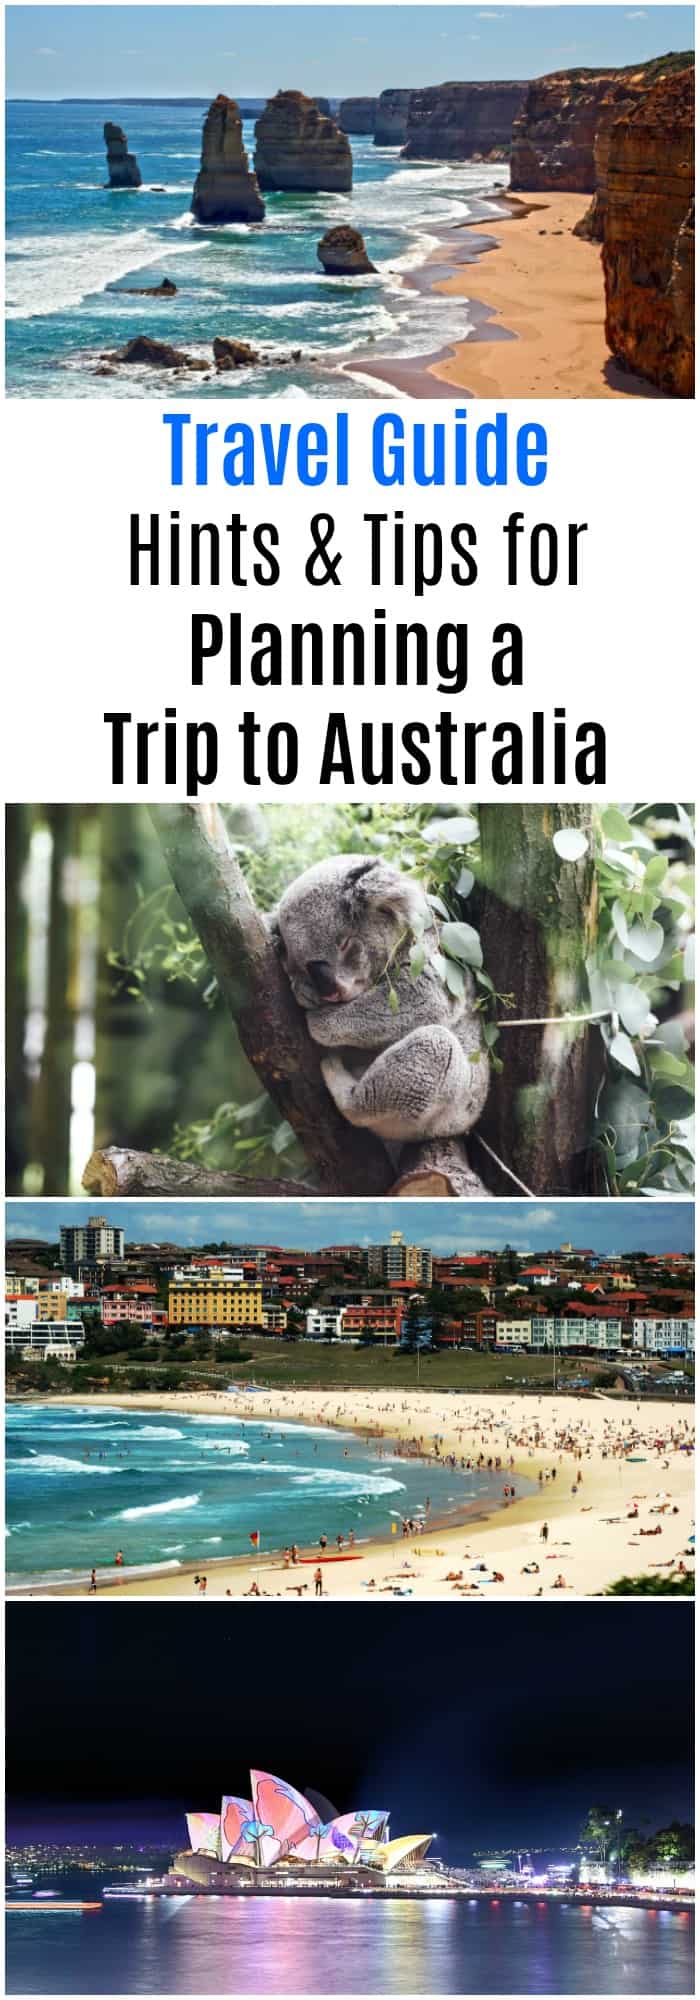 Travel Guide Hints & Tips for Planning a Trip to Australia #Australia #TravelAdvice #TravelTips 